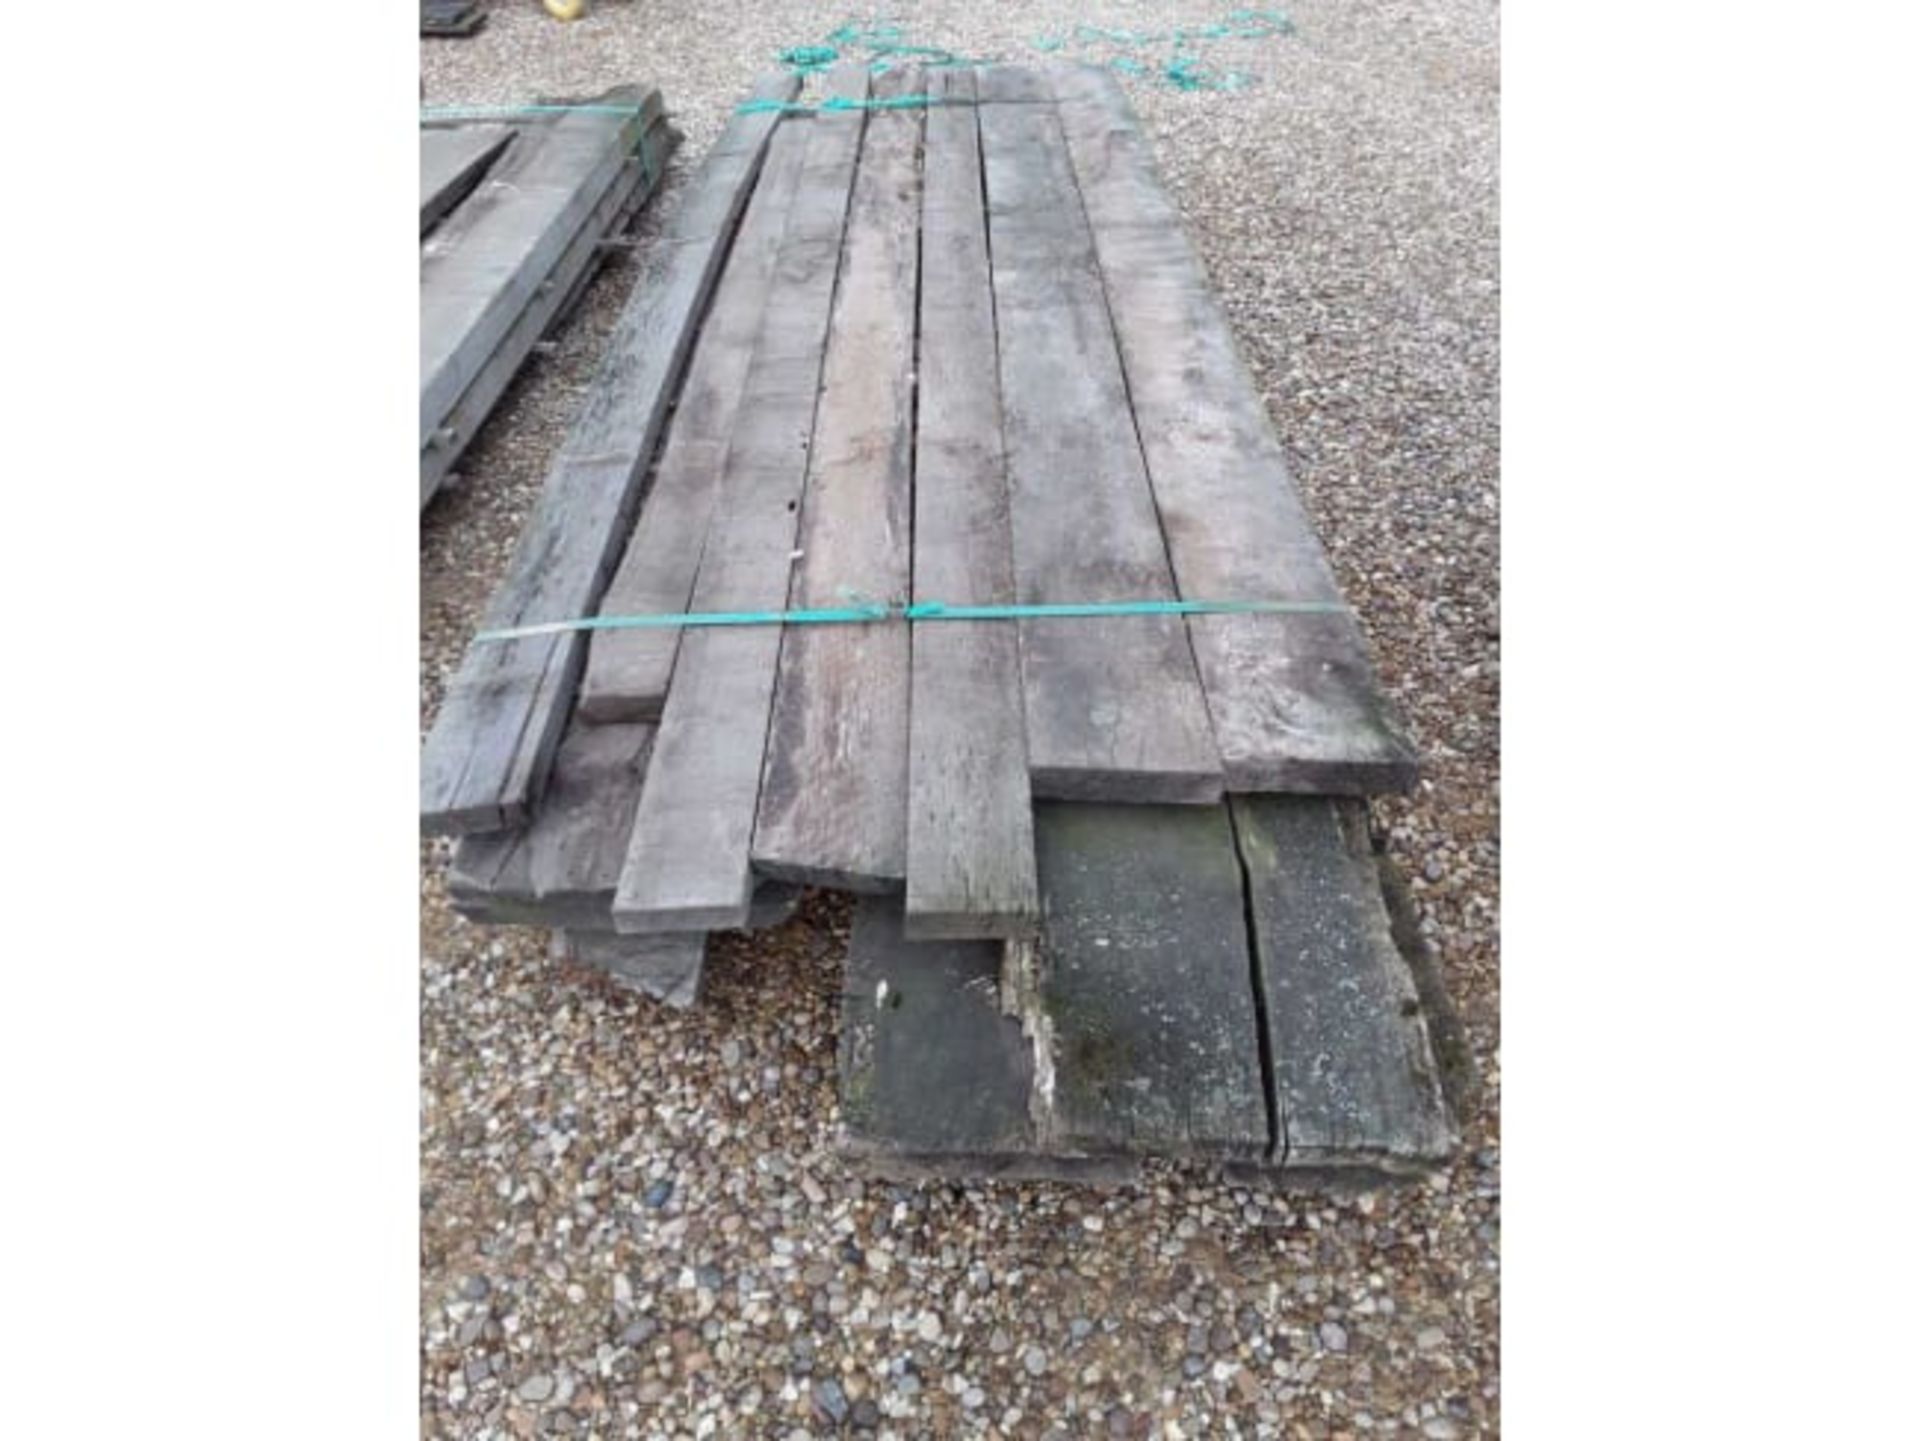 19 x Hardwood Timber Air Dried Sawn Waney Edge/ Live Edge English Oak Slabs/ Boards - Image 2 of 3